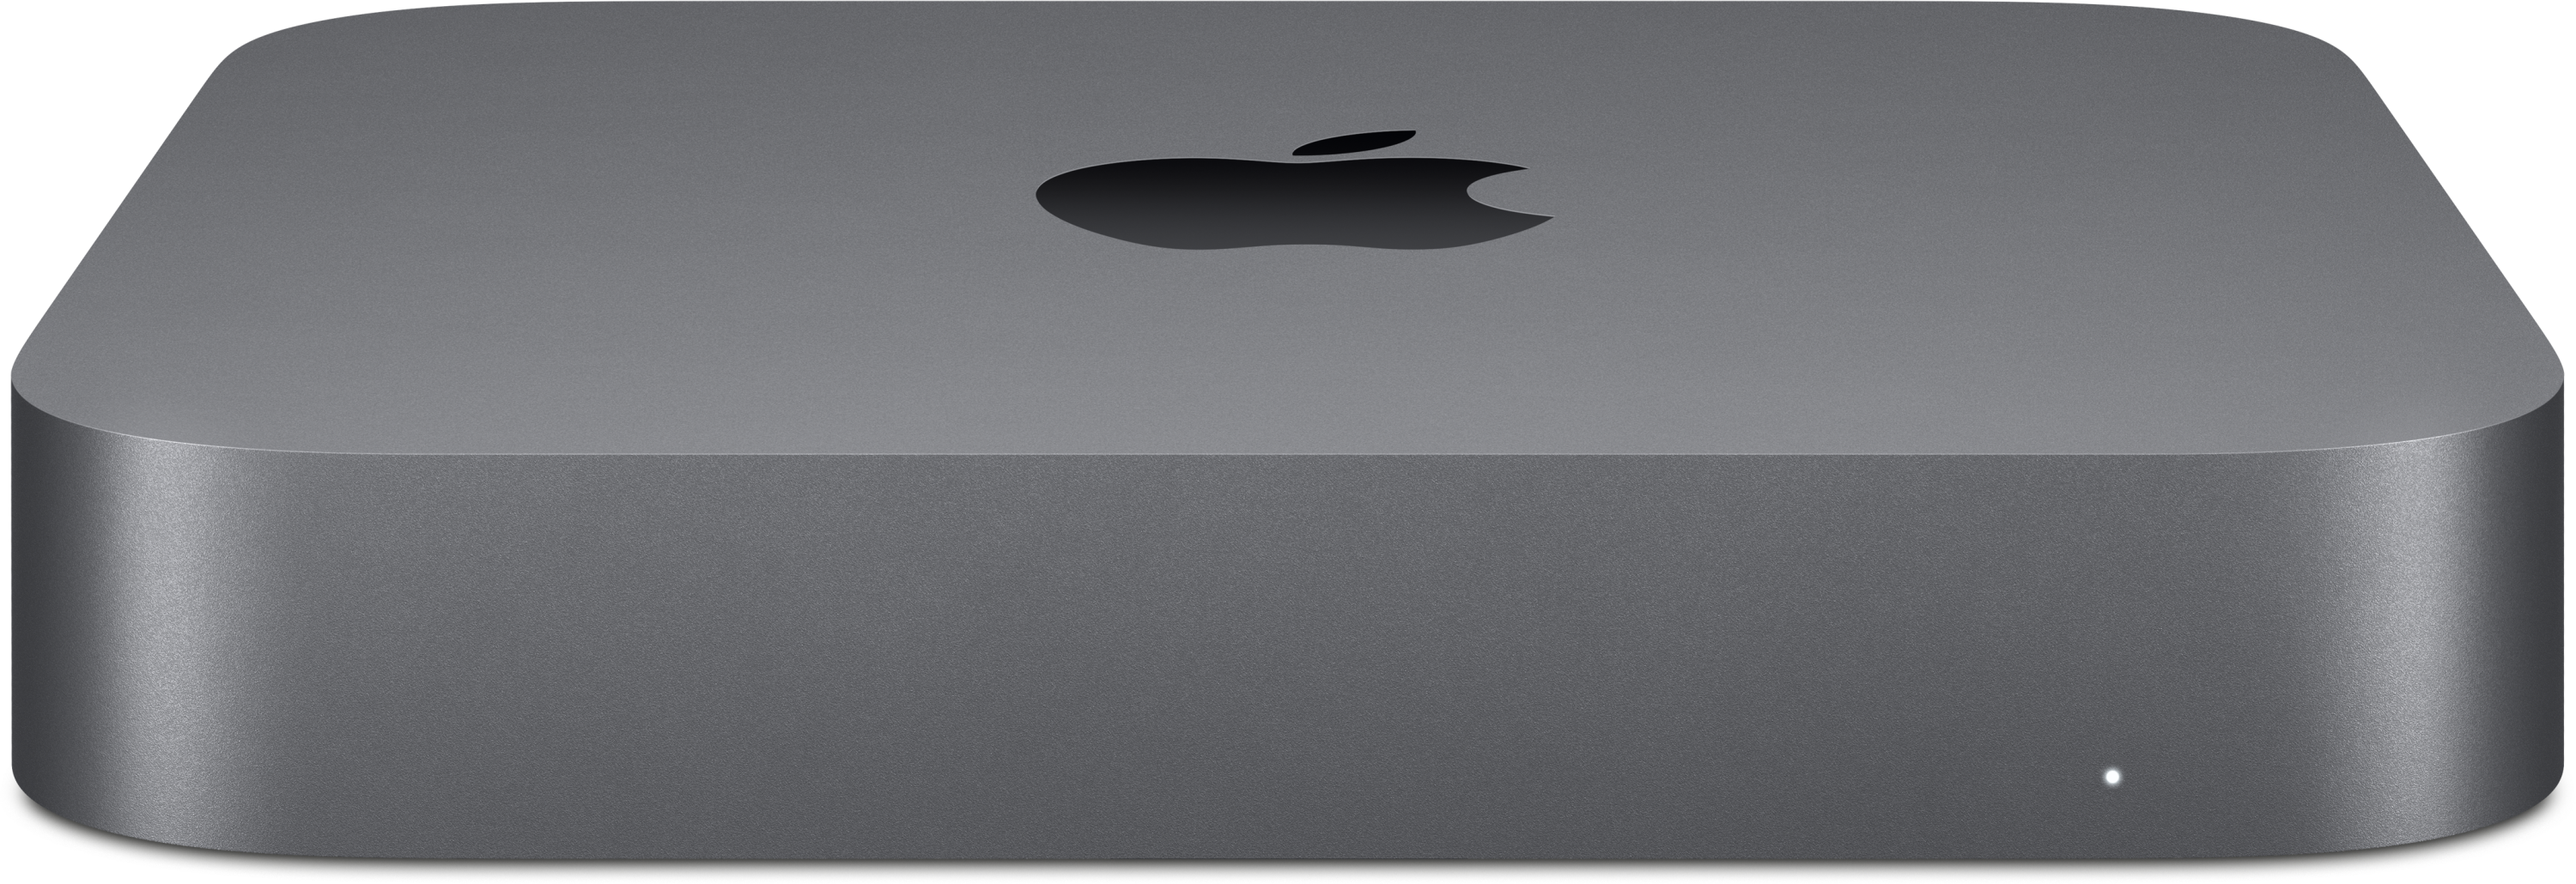 Apple Mac mini 3.6GHz I3 4-Core 8GB/256GB Space Gray